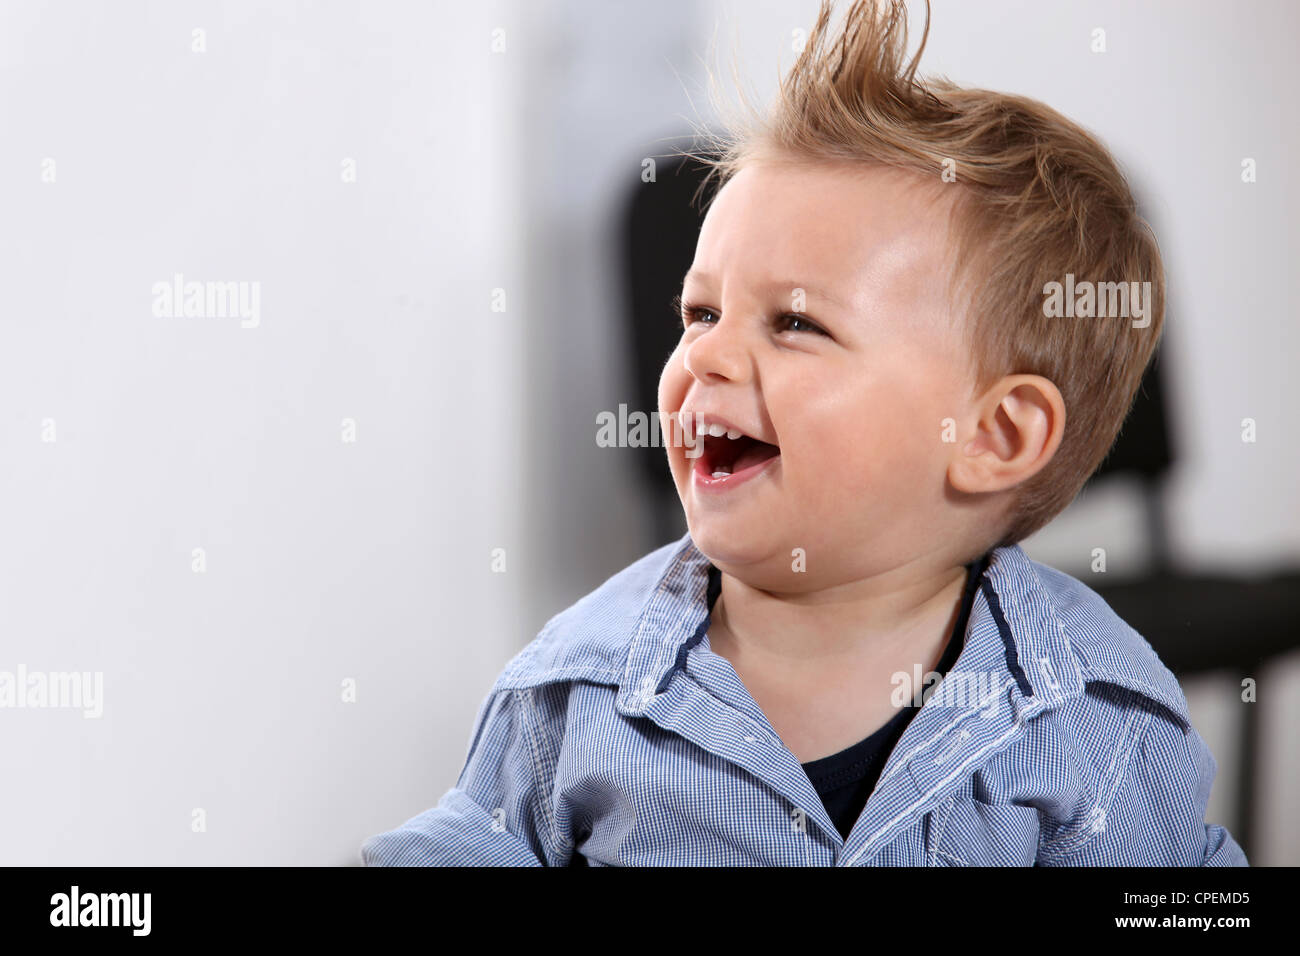 Child laughing Stock Photo